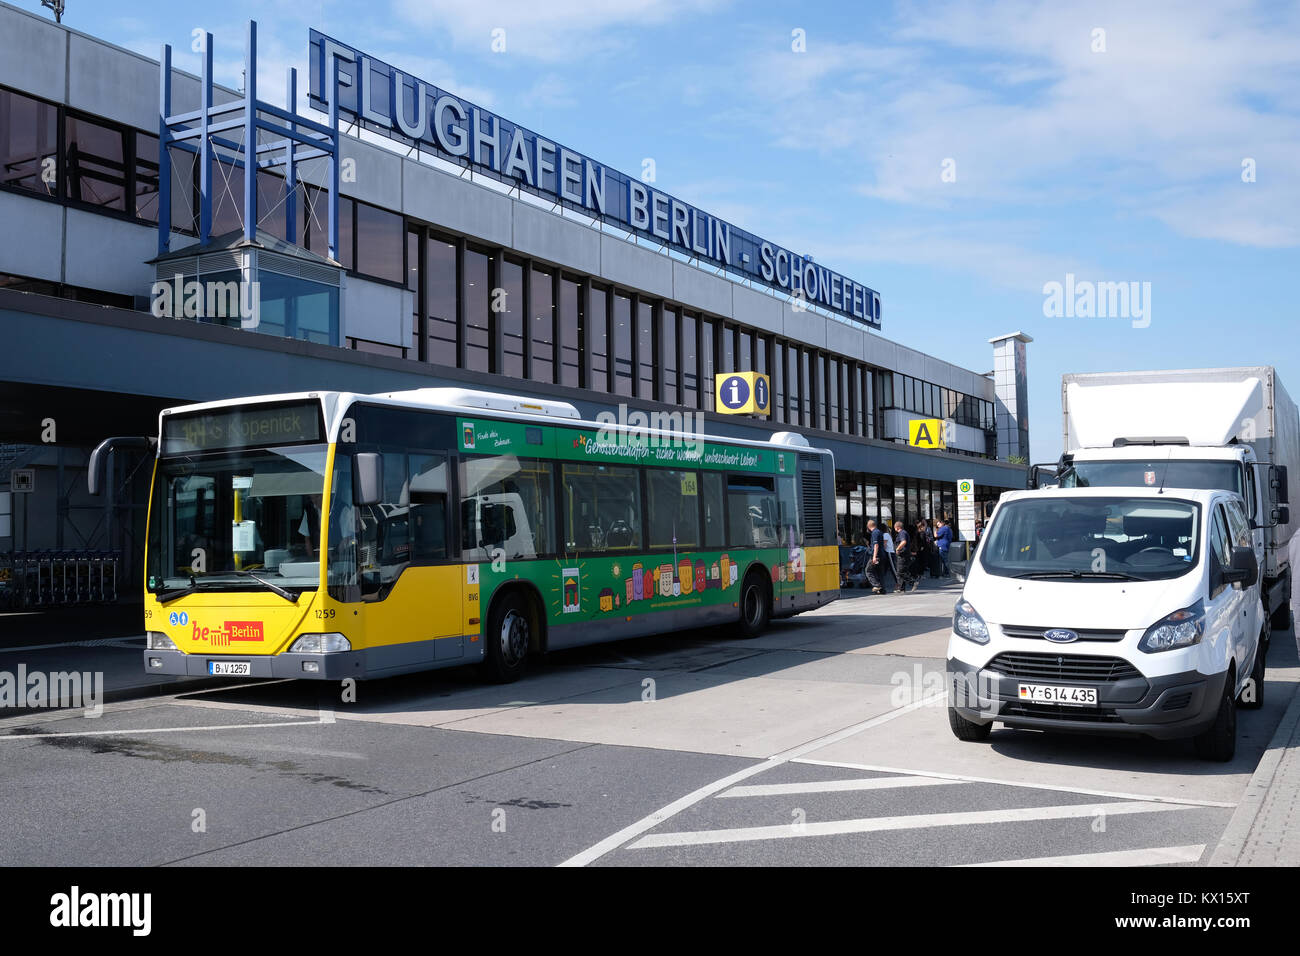 A bus departing from the Flughafen Berlin Schönefeld - Berlin Schönefeld Airport Stock Photo